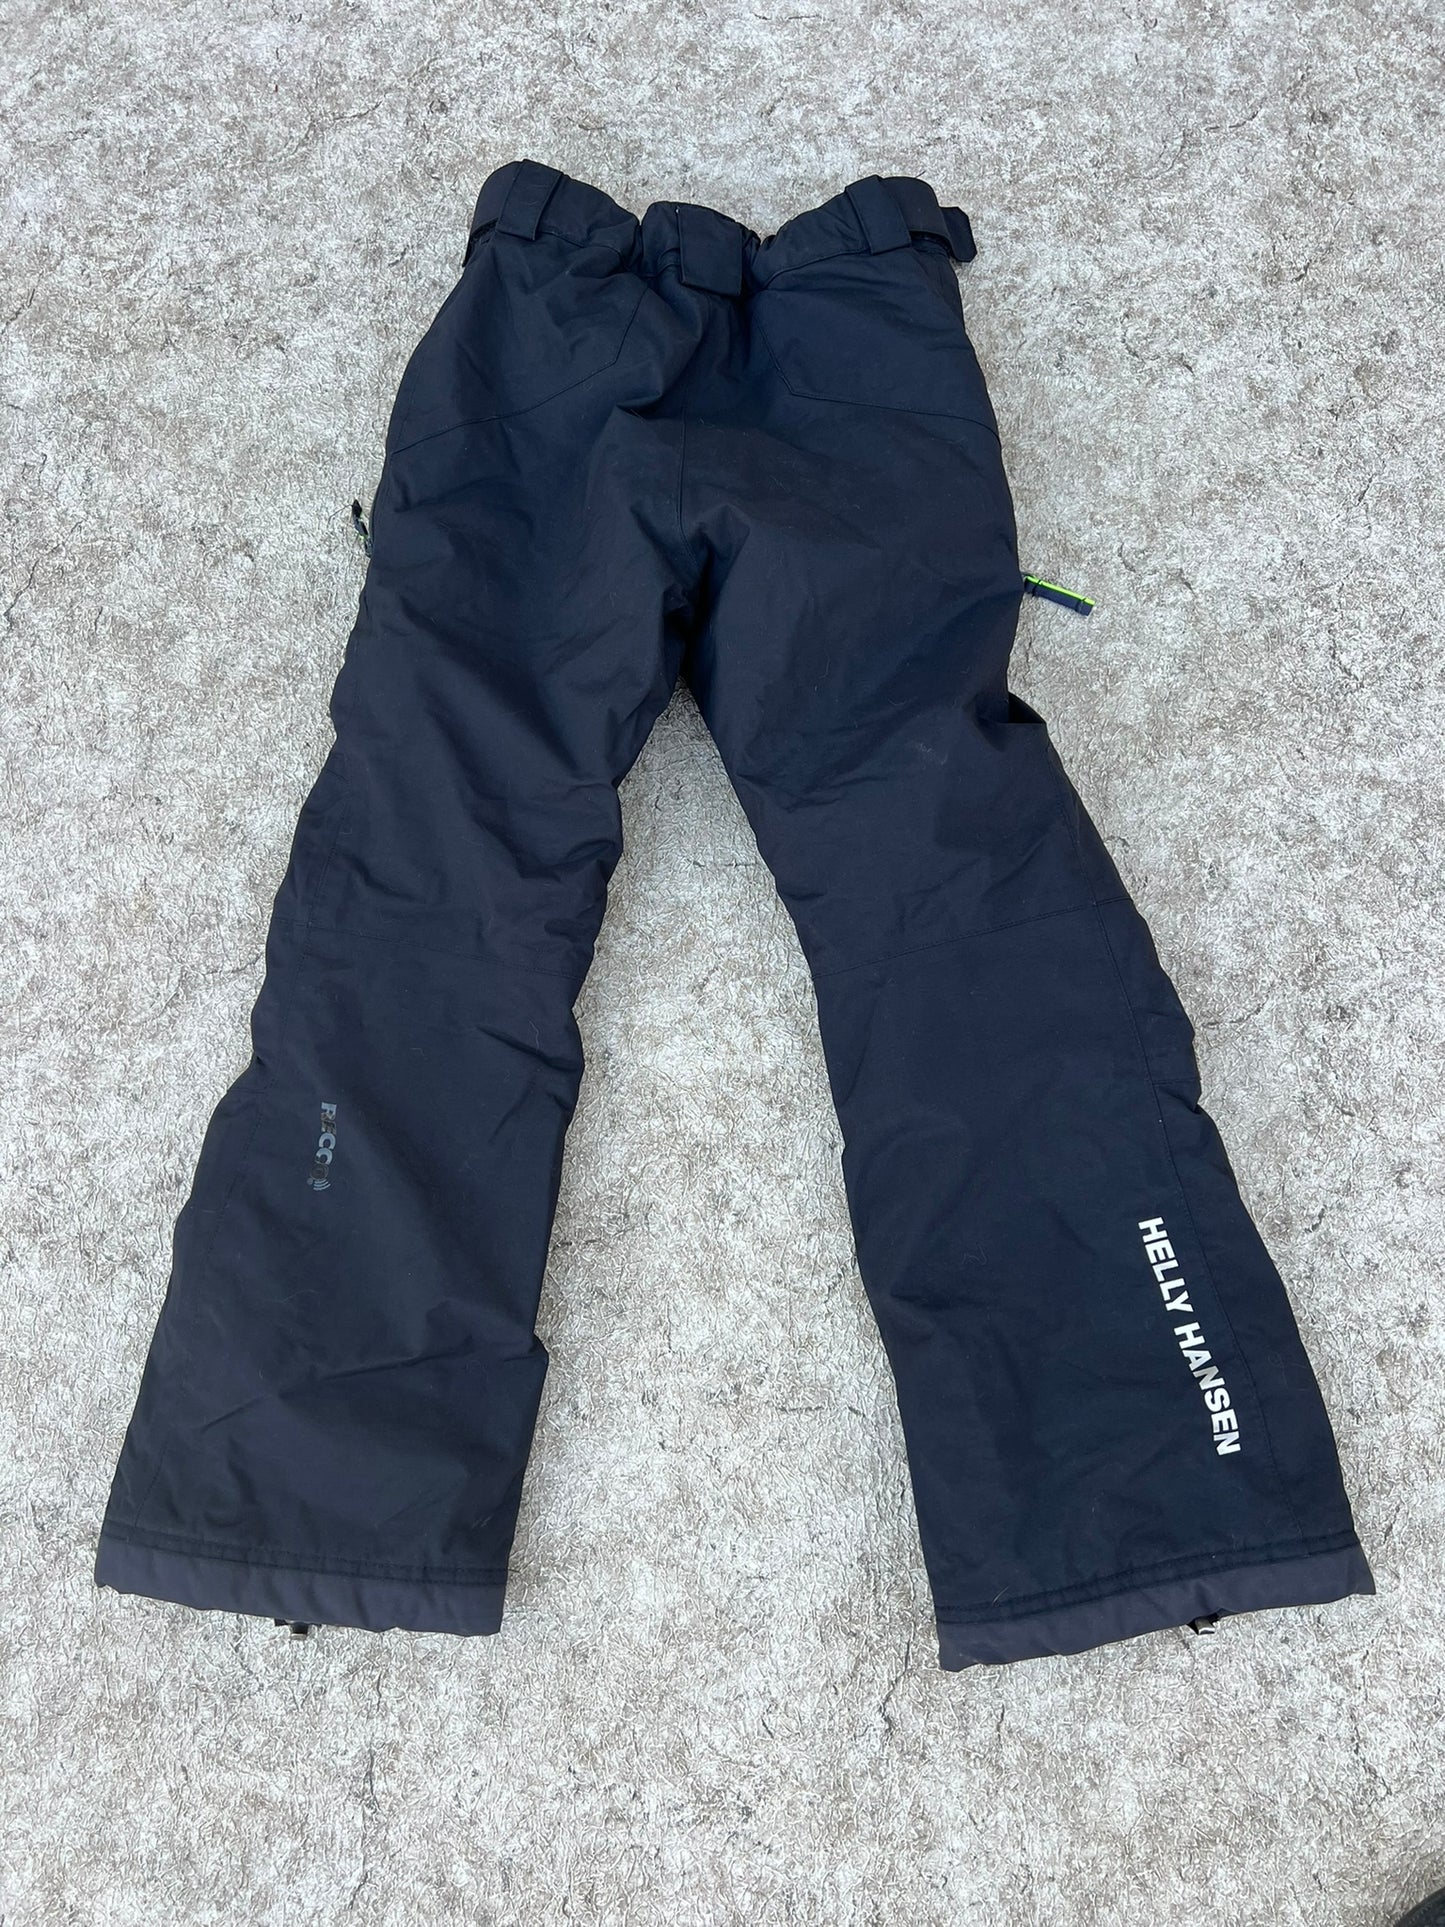 Snow Pants Child Size 10 Helly Hansen Black Waterproof New Demo Model